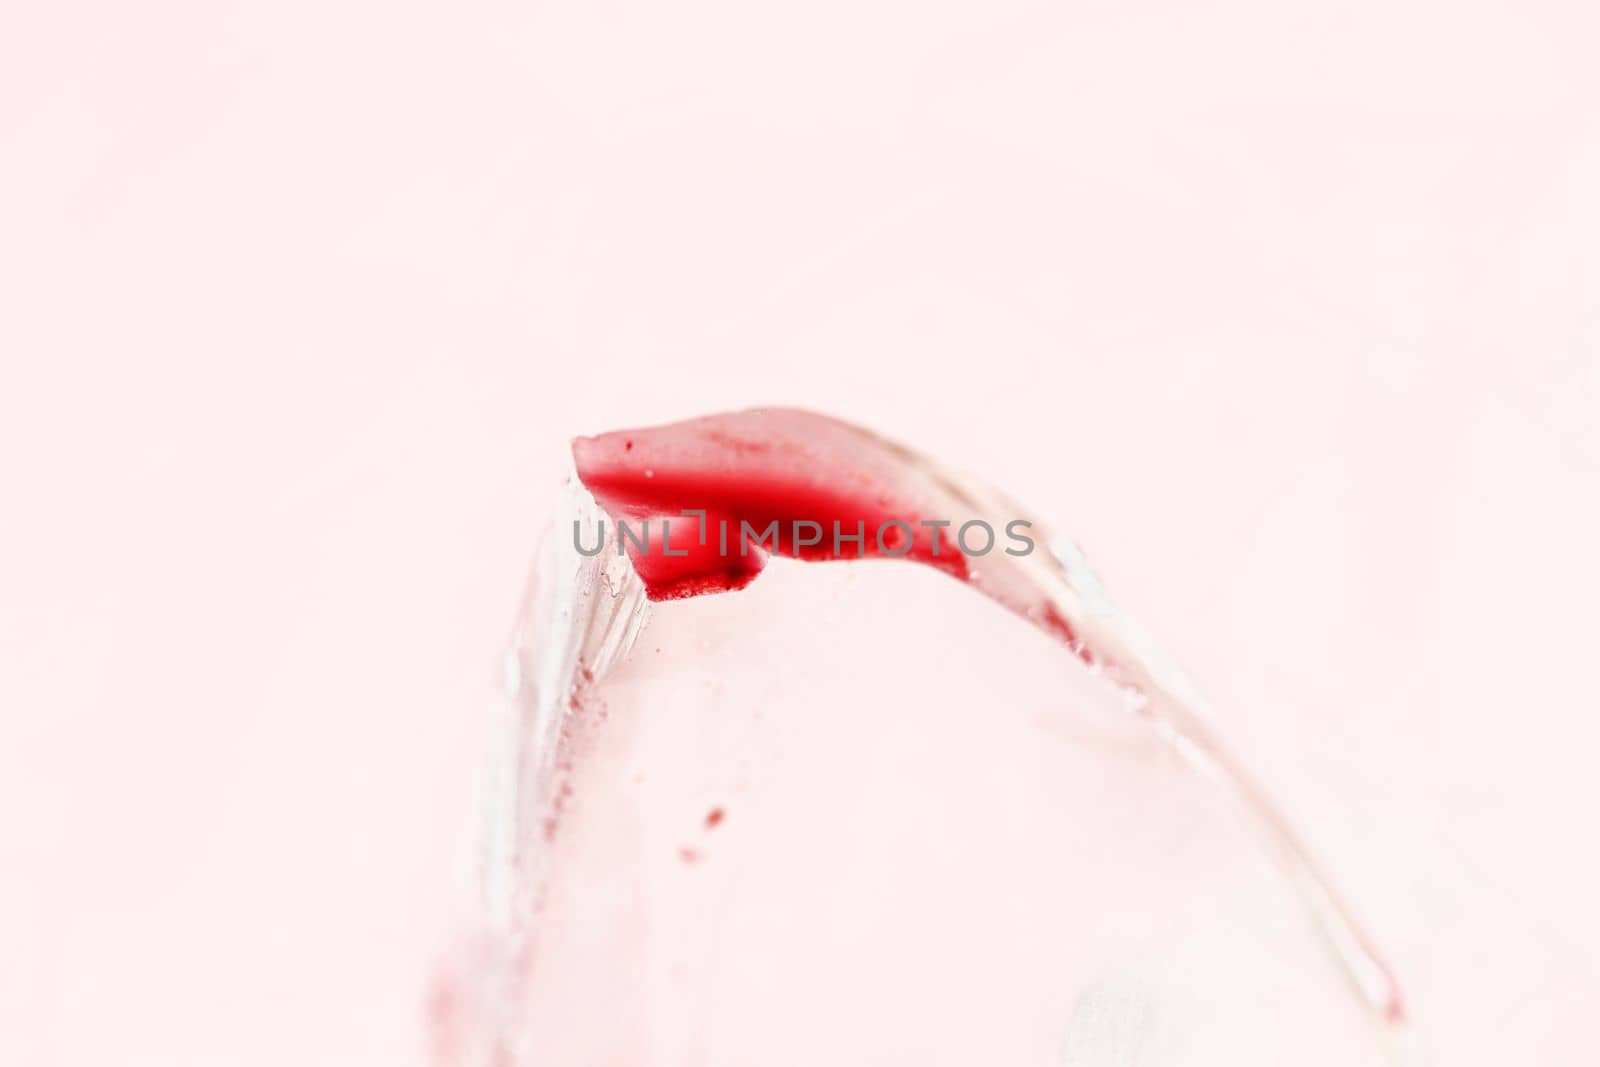 Blood drop on glass shard by victimewalker